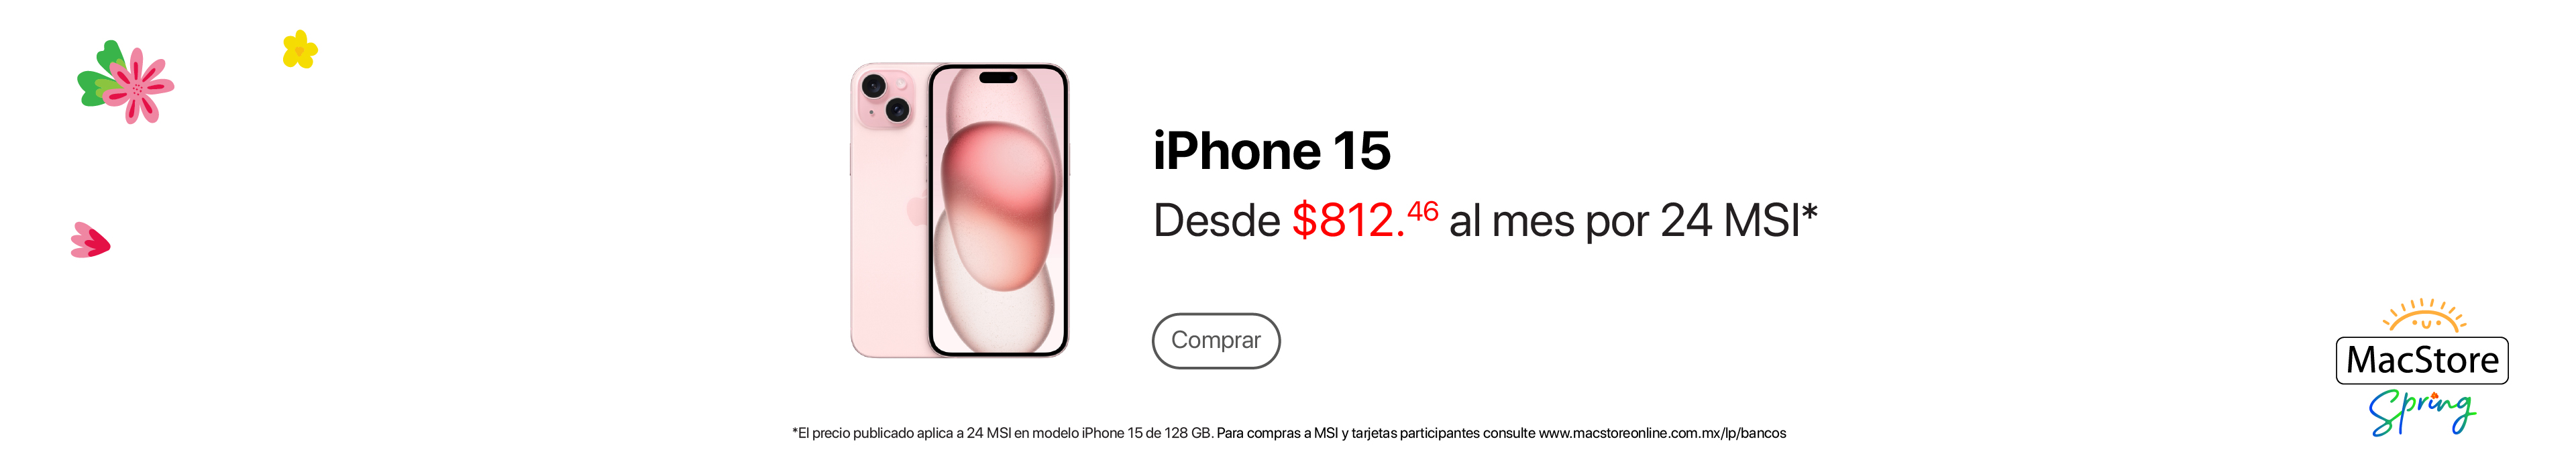 iPhone 15 19mzo